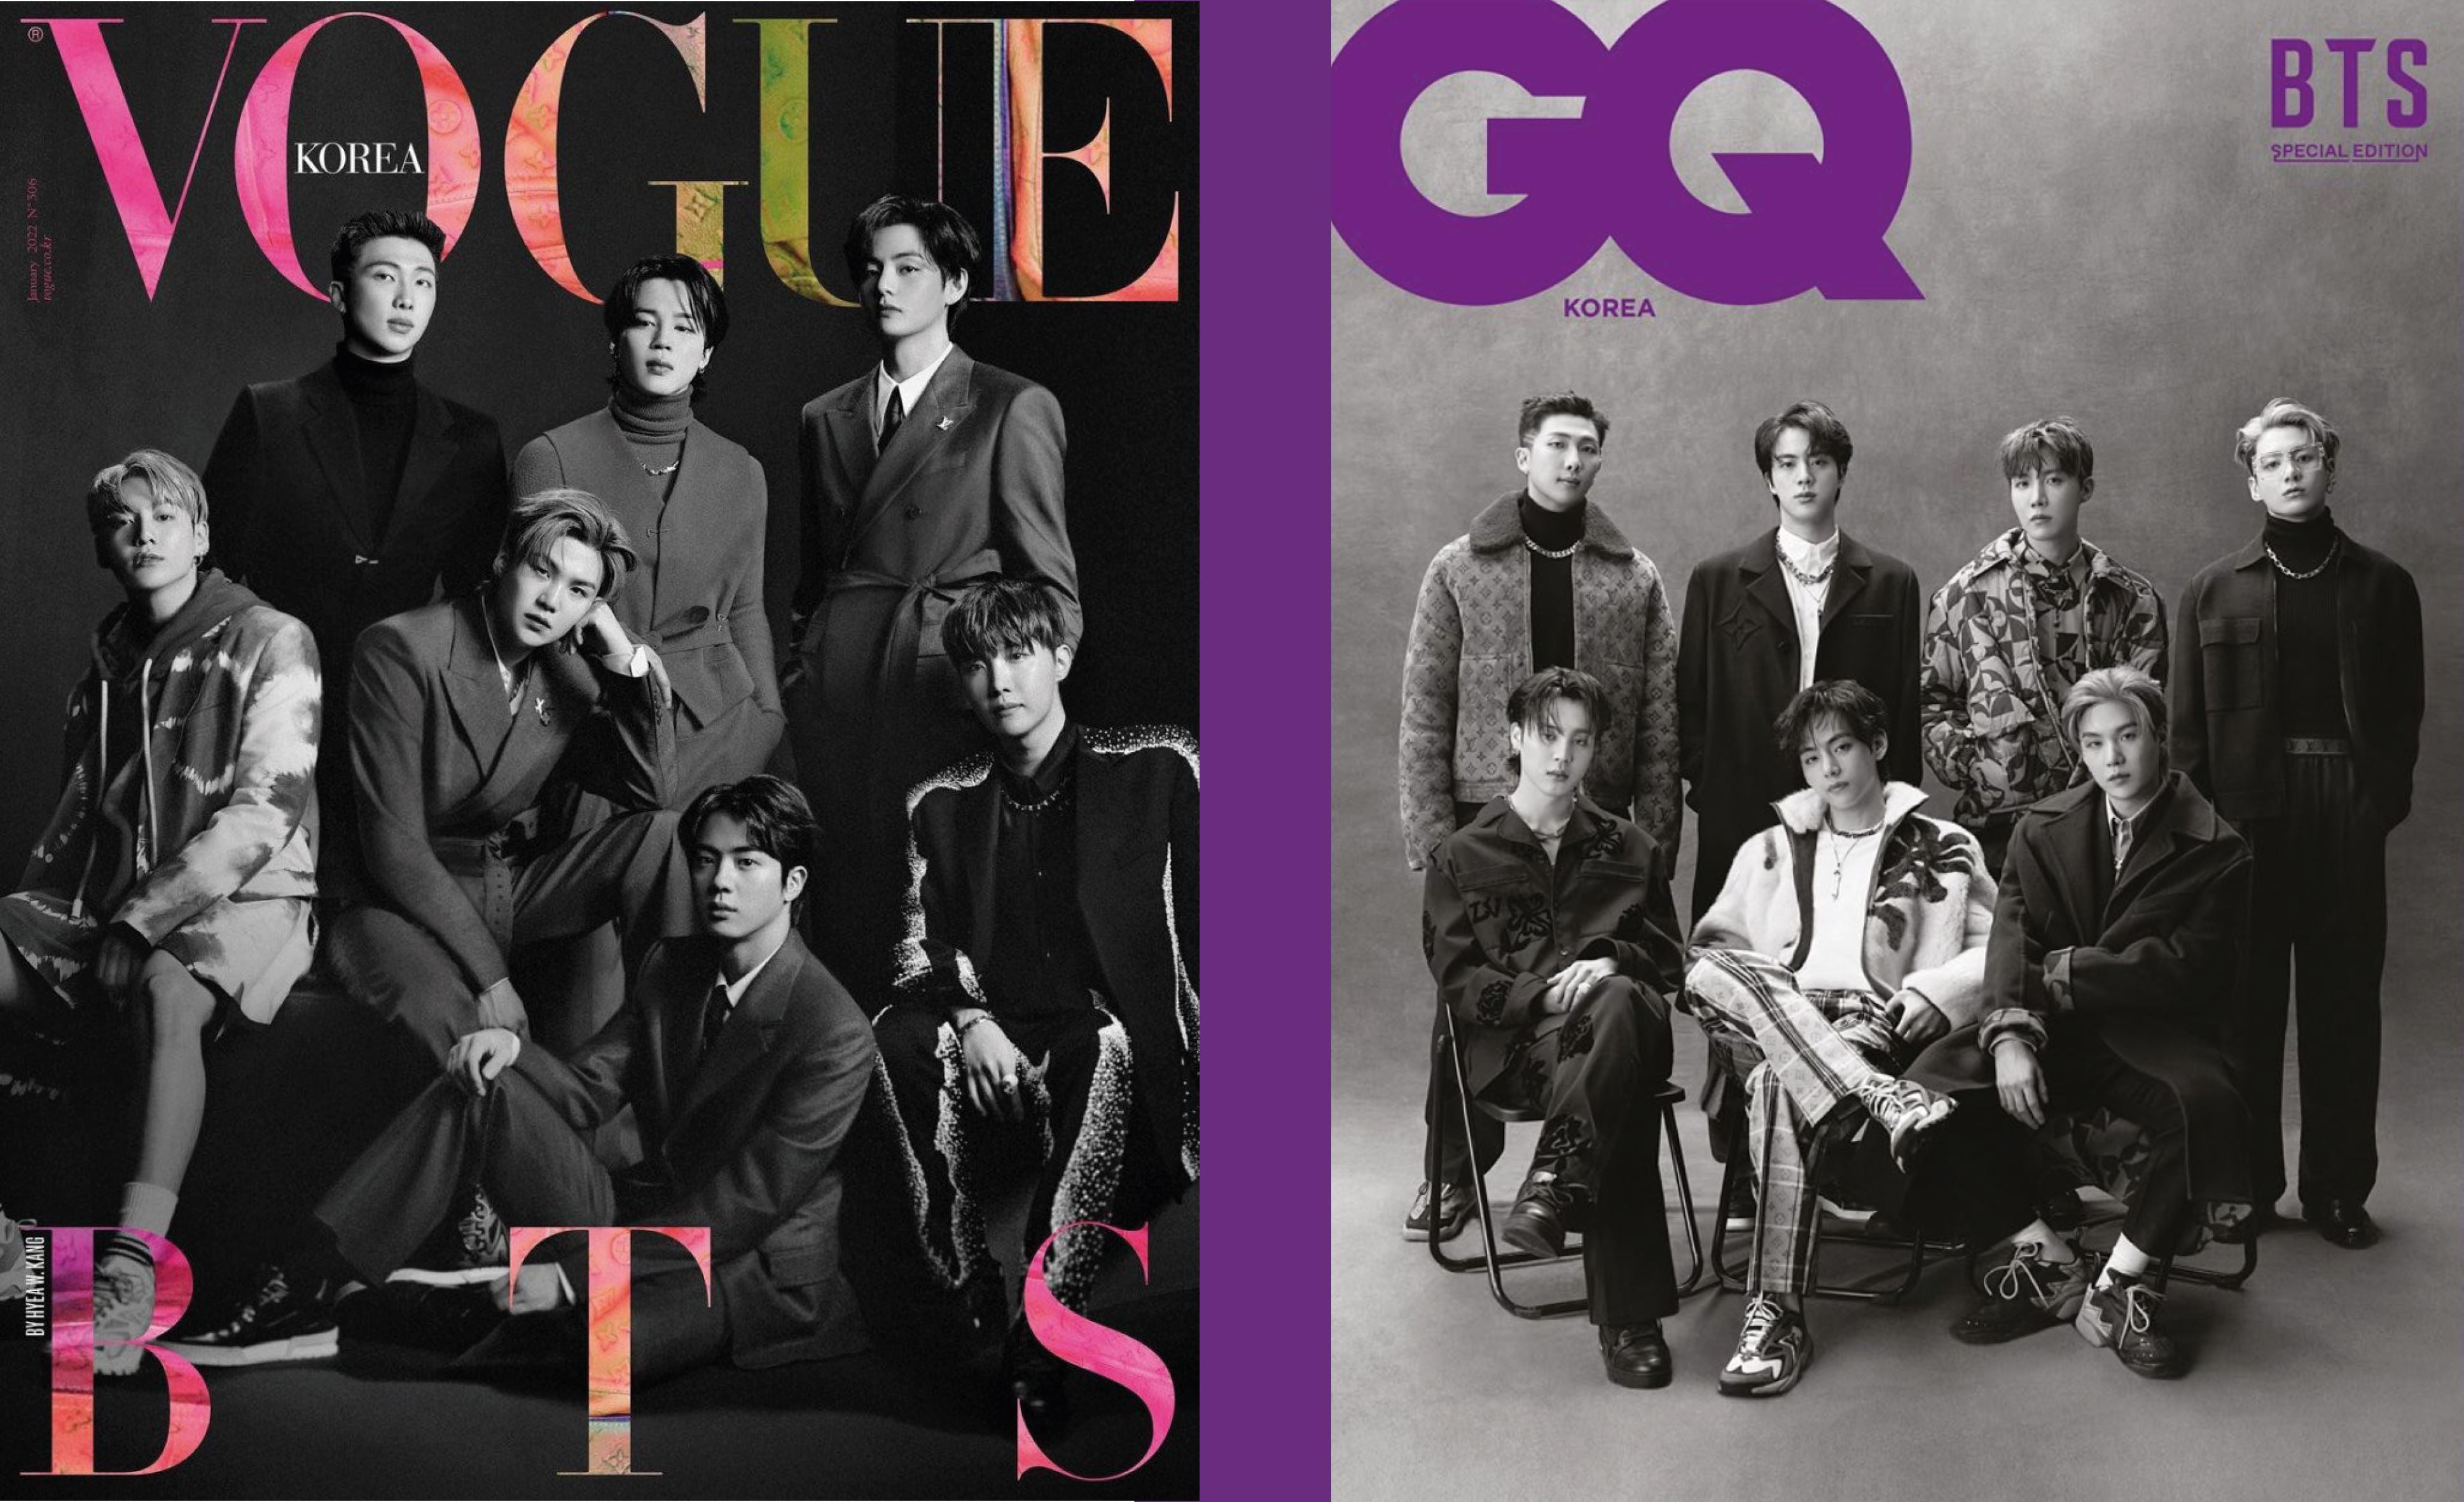 Vogue & GQ Korea present the global boy band BTS! — Nolae